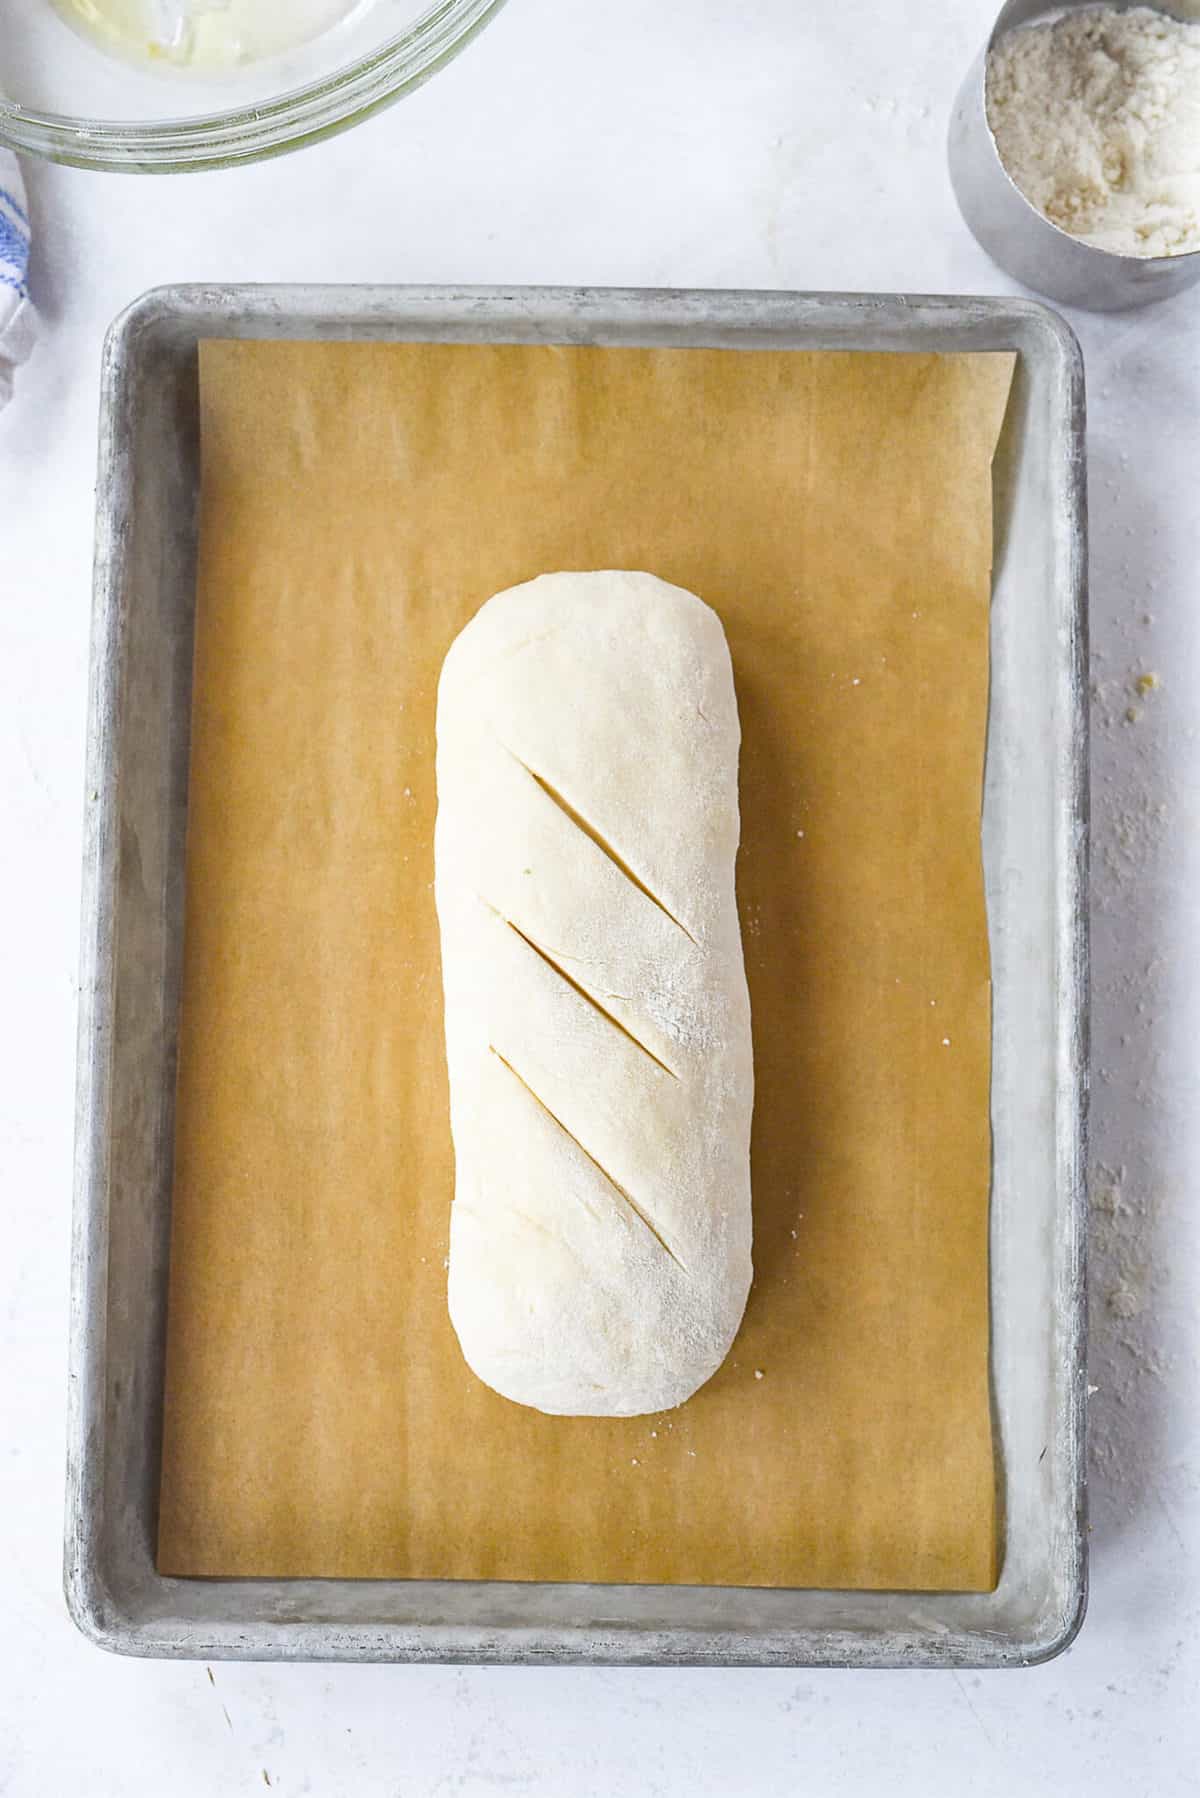 bread rising on baking sheet